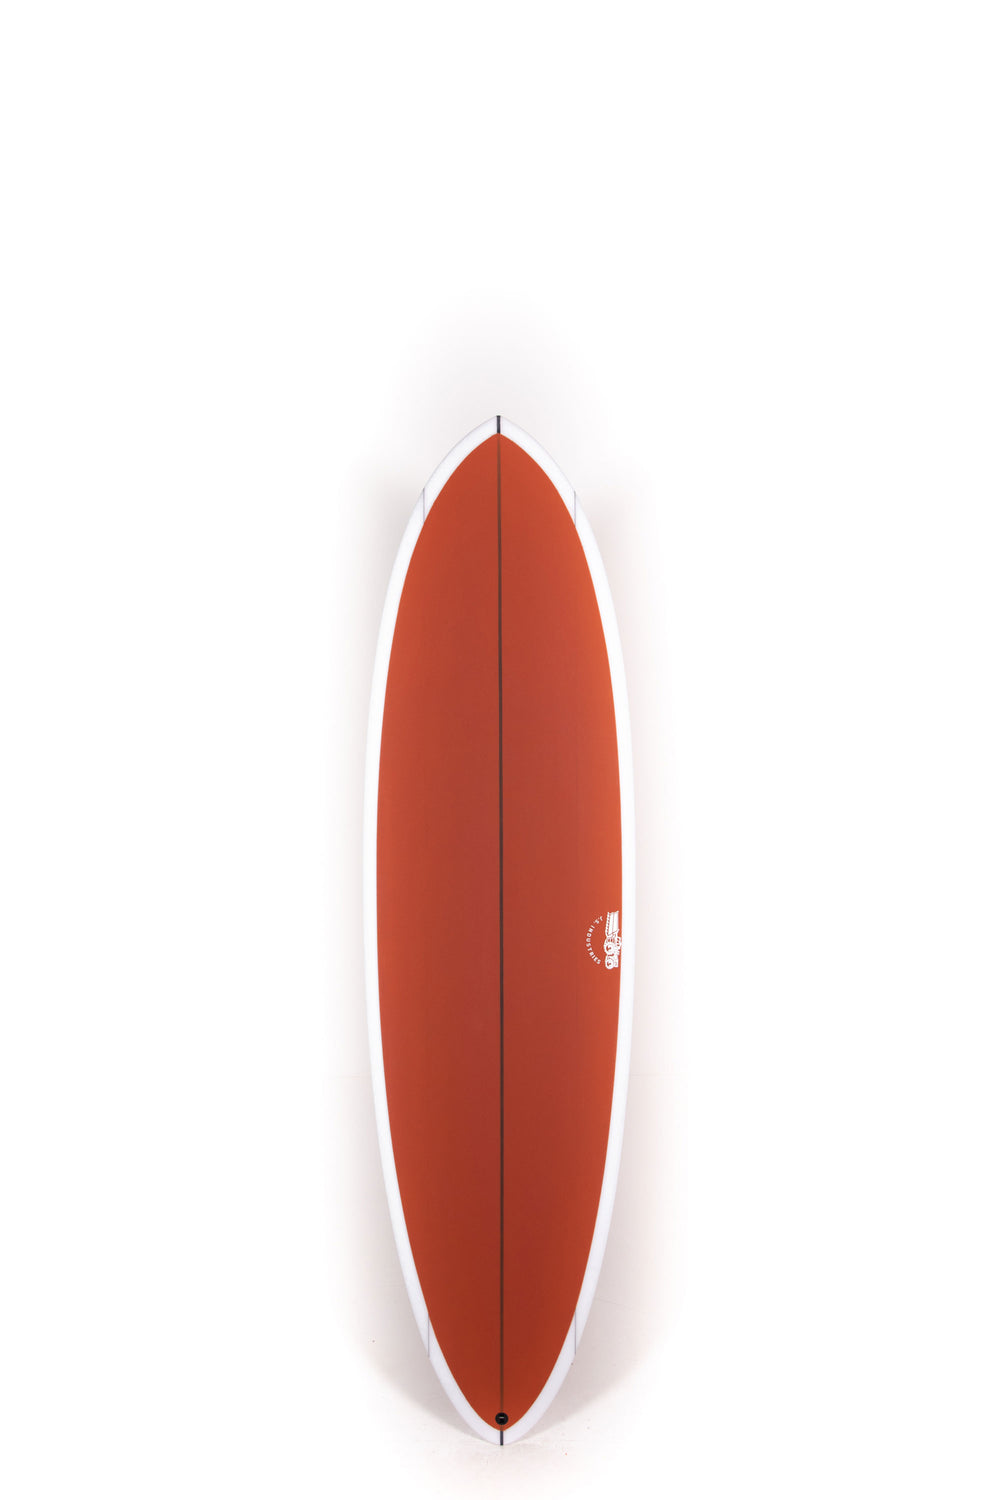 Pukas Surf Shop - JS Surfboards - BIG BARON - 6'4